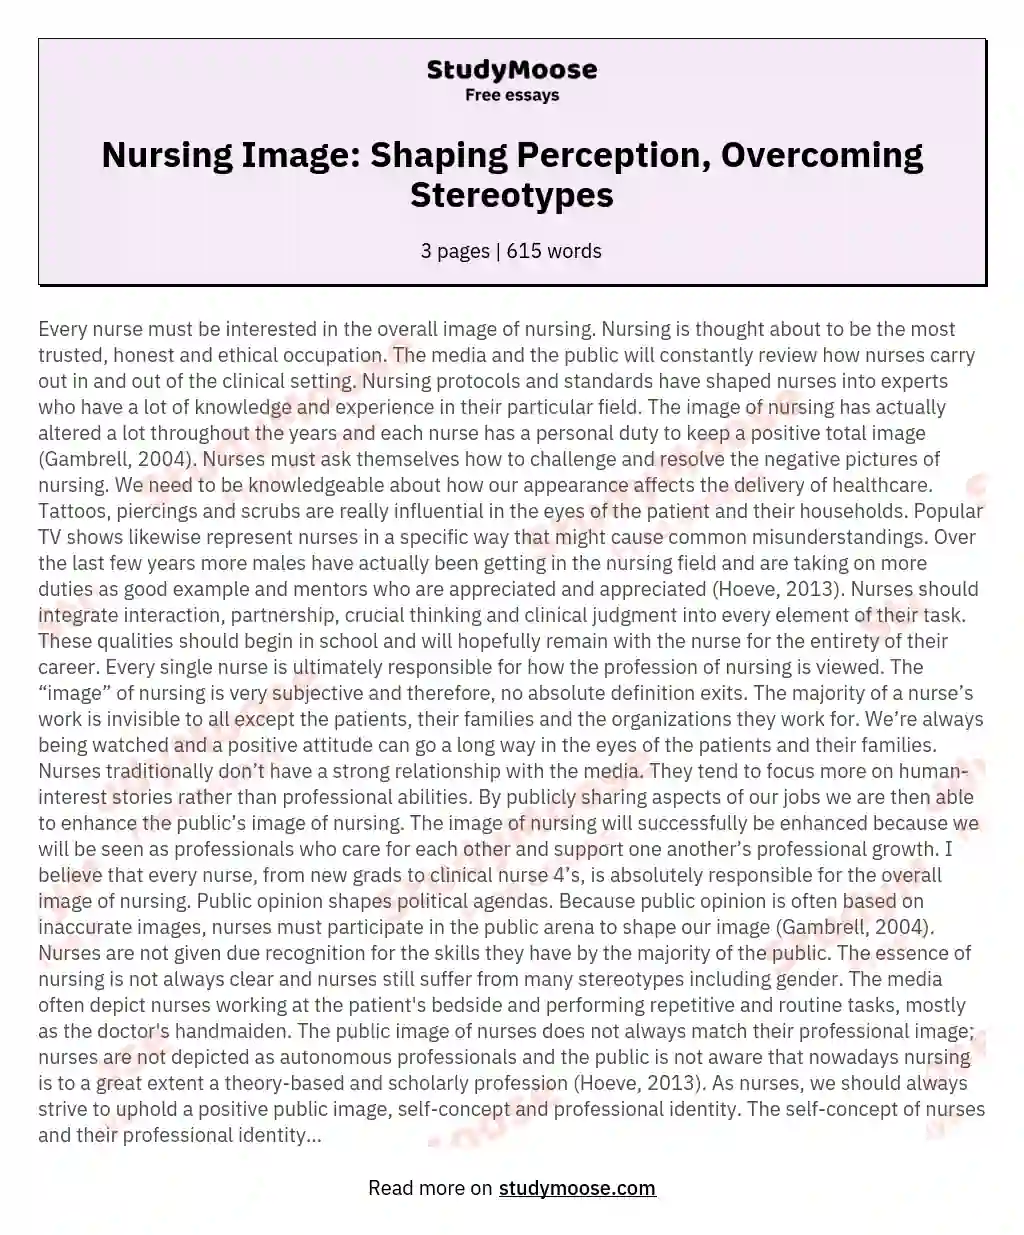 Nursing Image: Shaping Perception, Overcoming Stereotypes essay